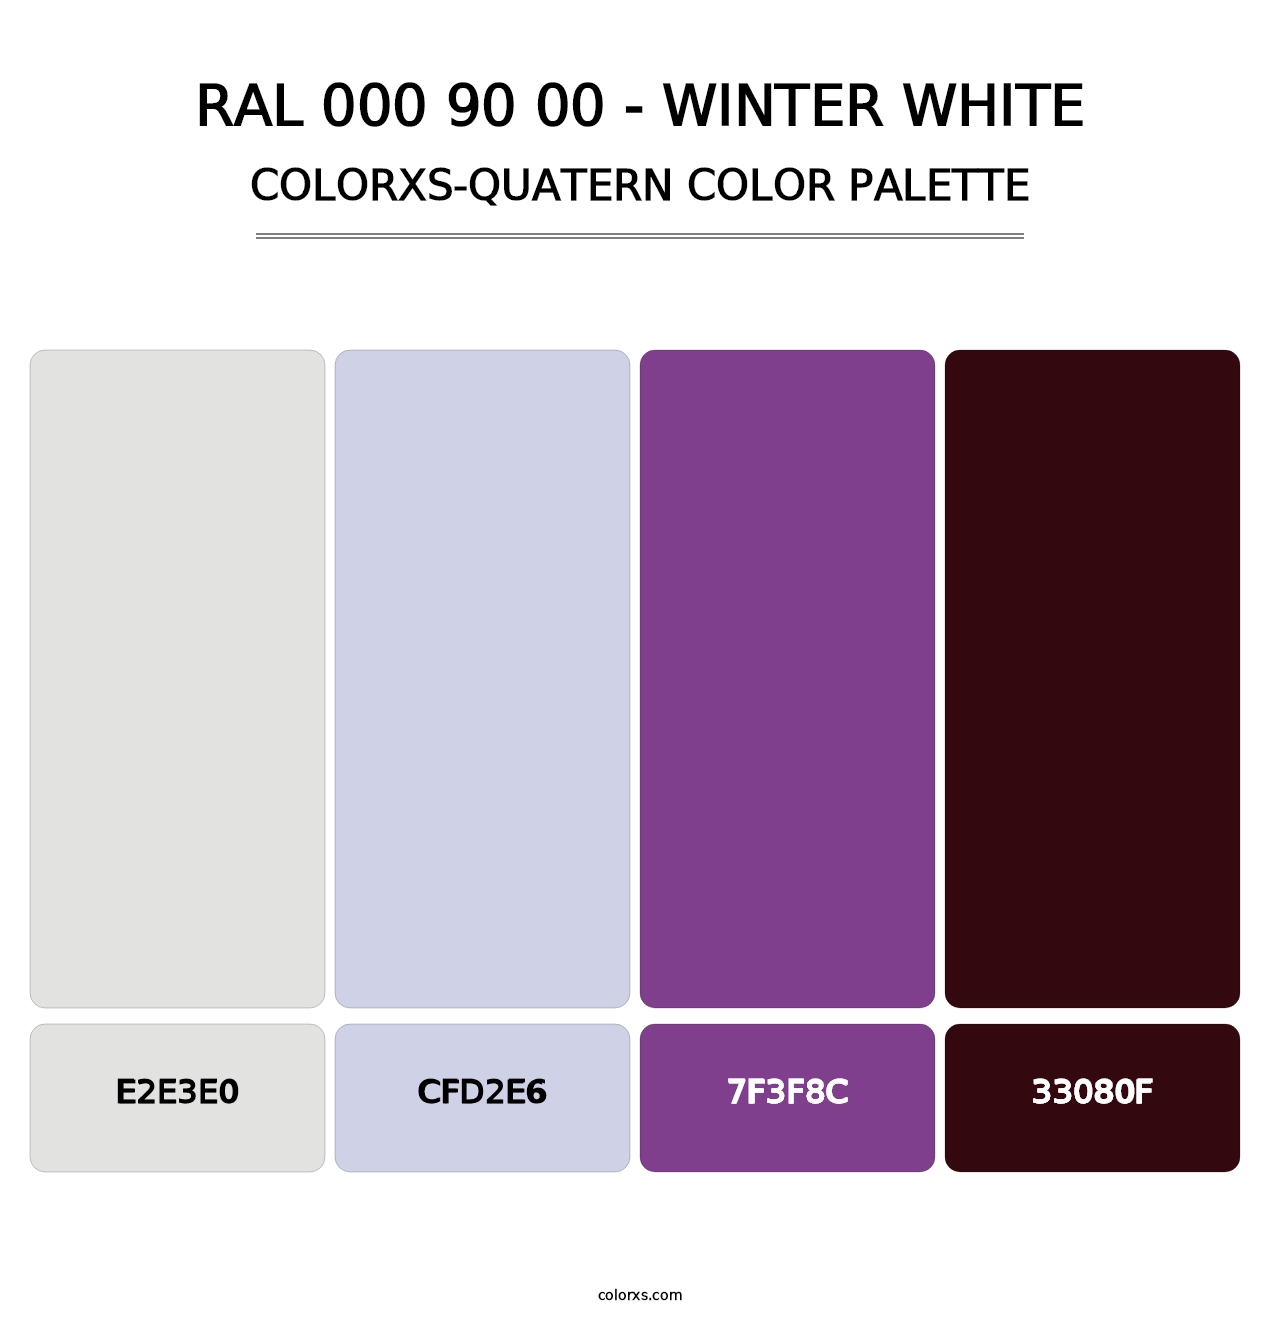 RAL 000 90 00 - Winter White - Colorxs Quatern Palette